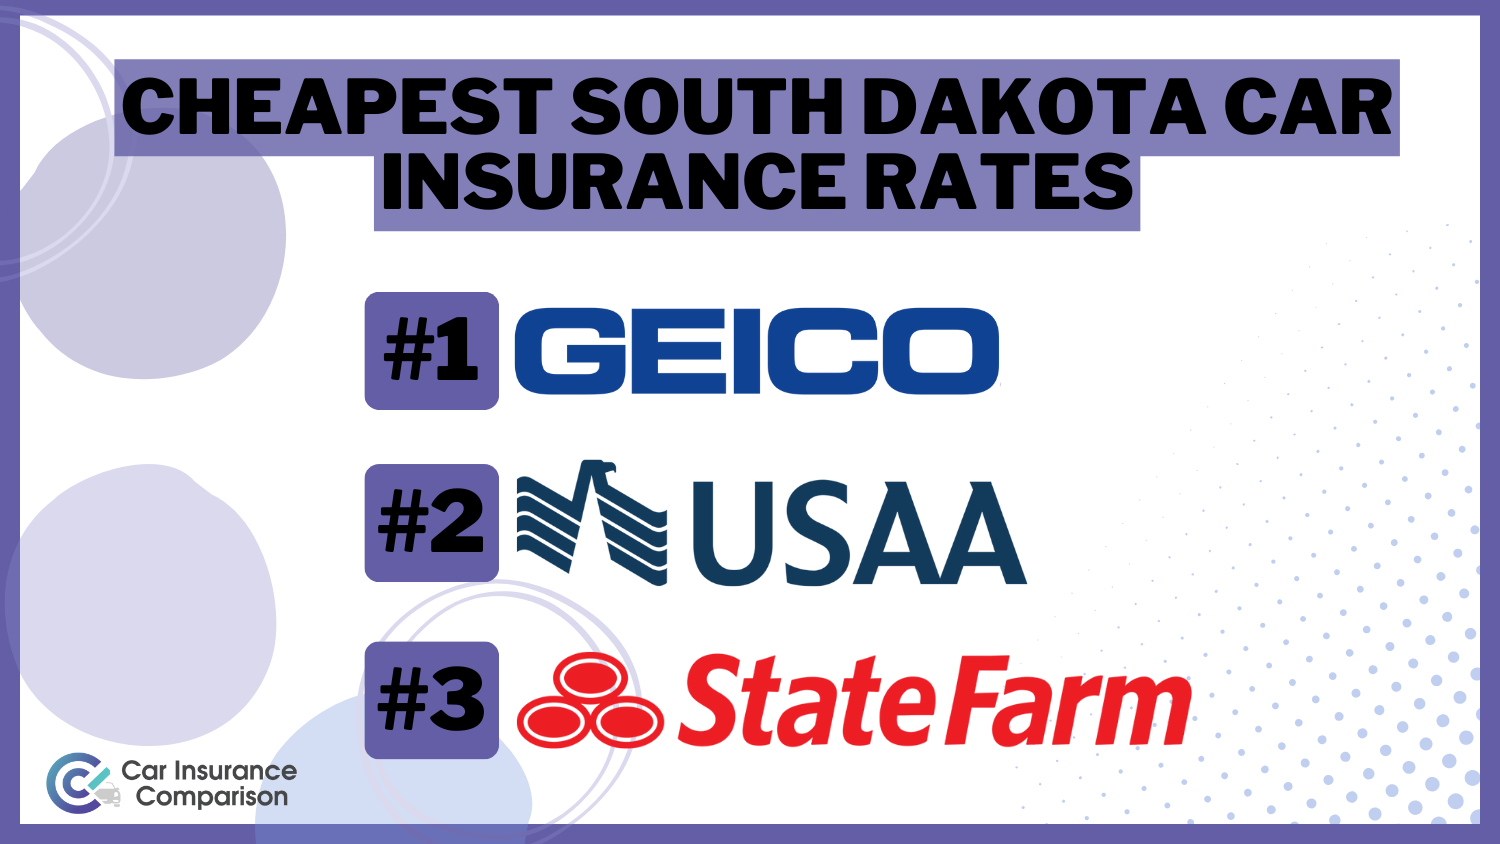 Cheapest South Dakota Car Insurance Rates: Geico, USAA, State Farm